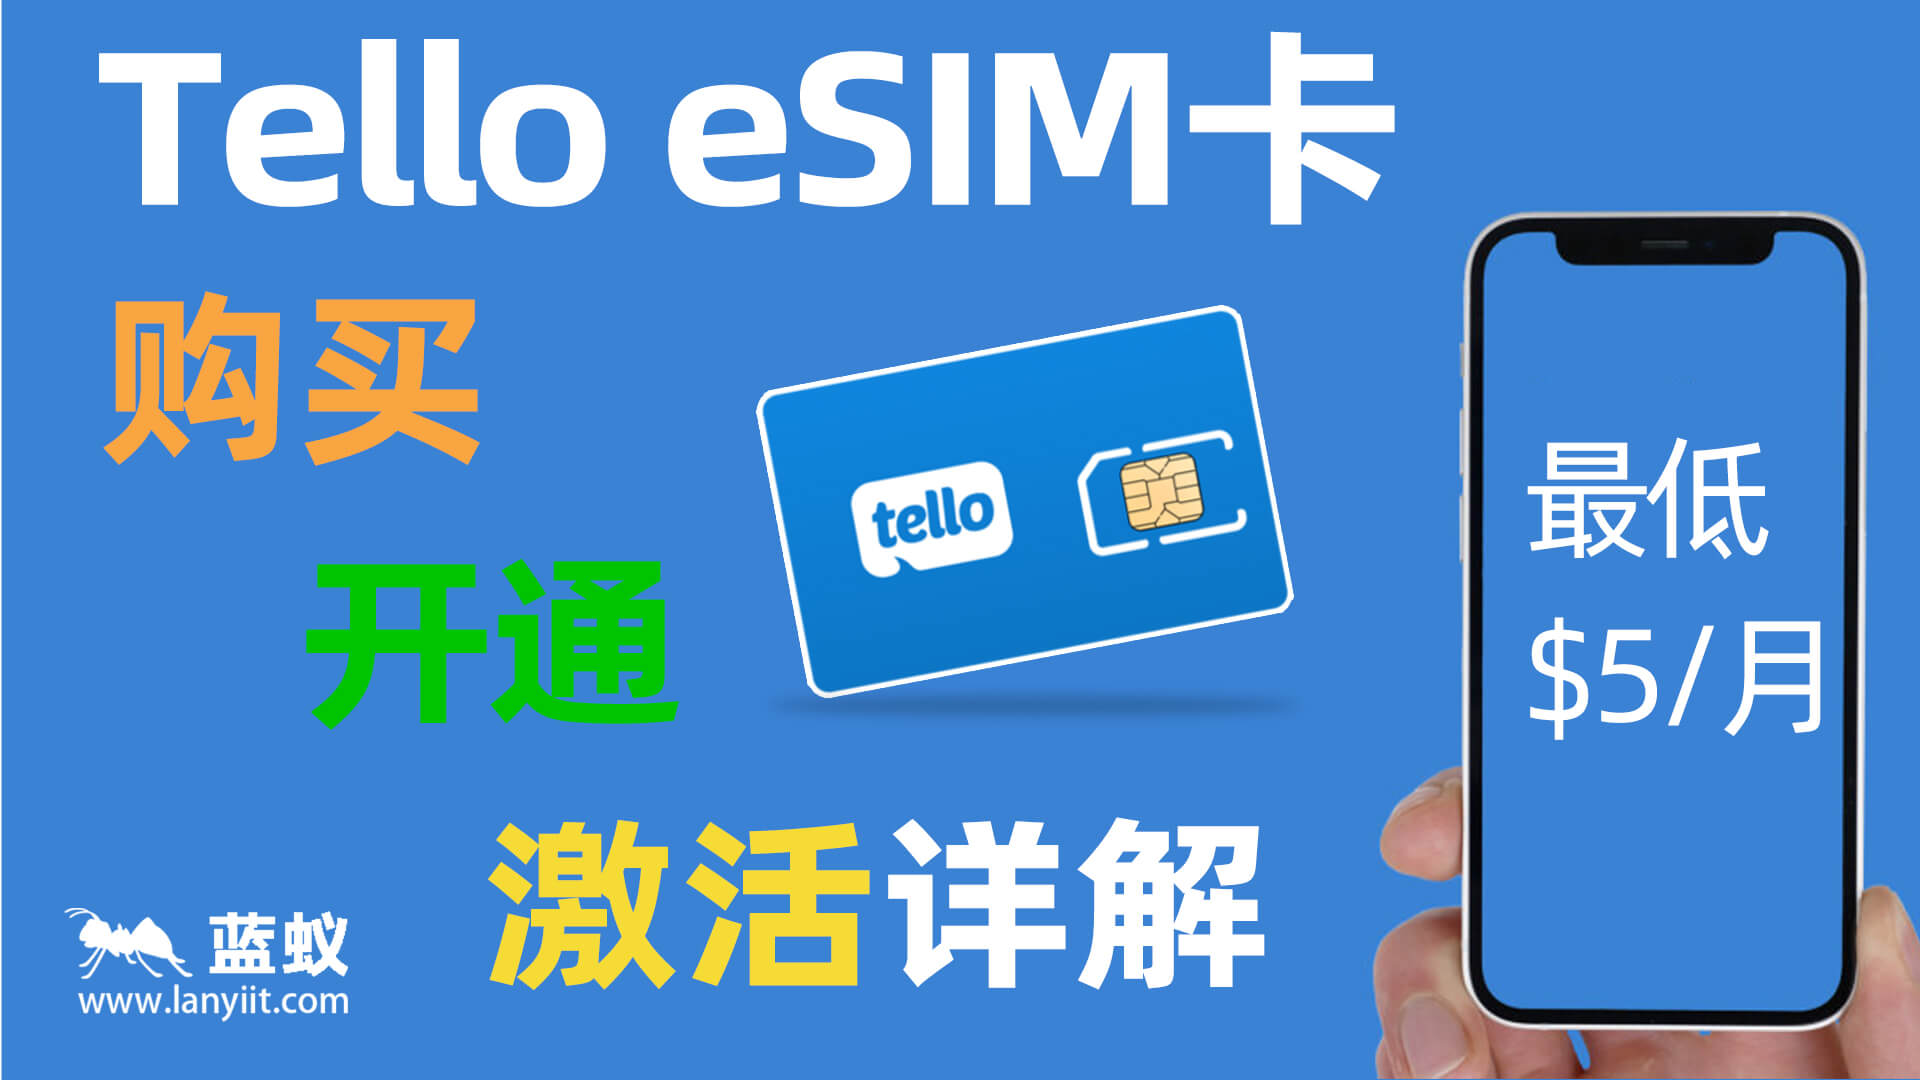 Tello eSIM 美国实体手机电话卡购买与使用全攻略